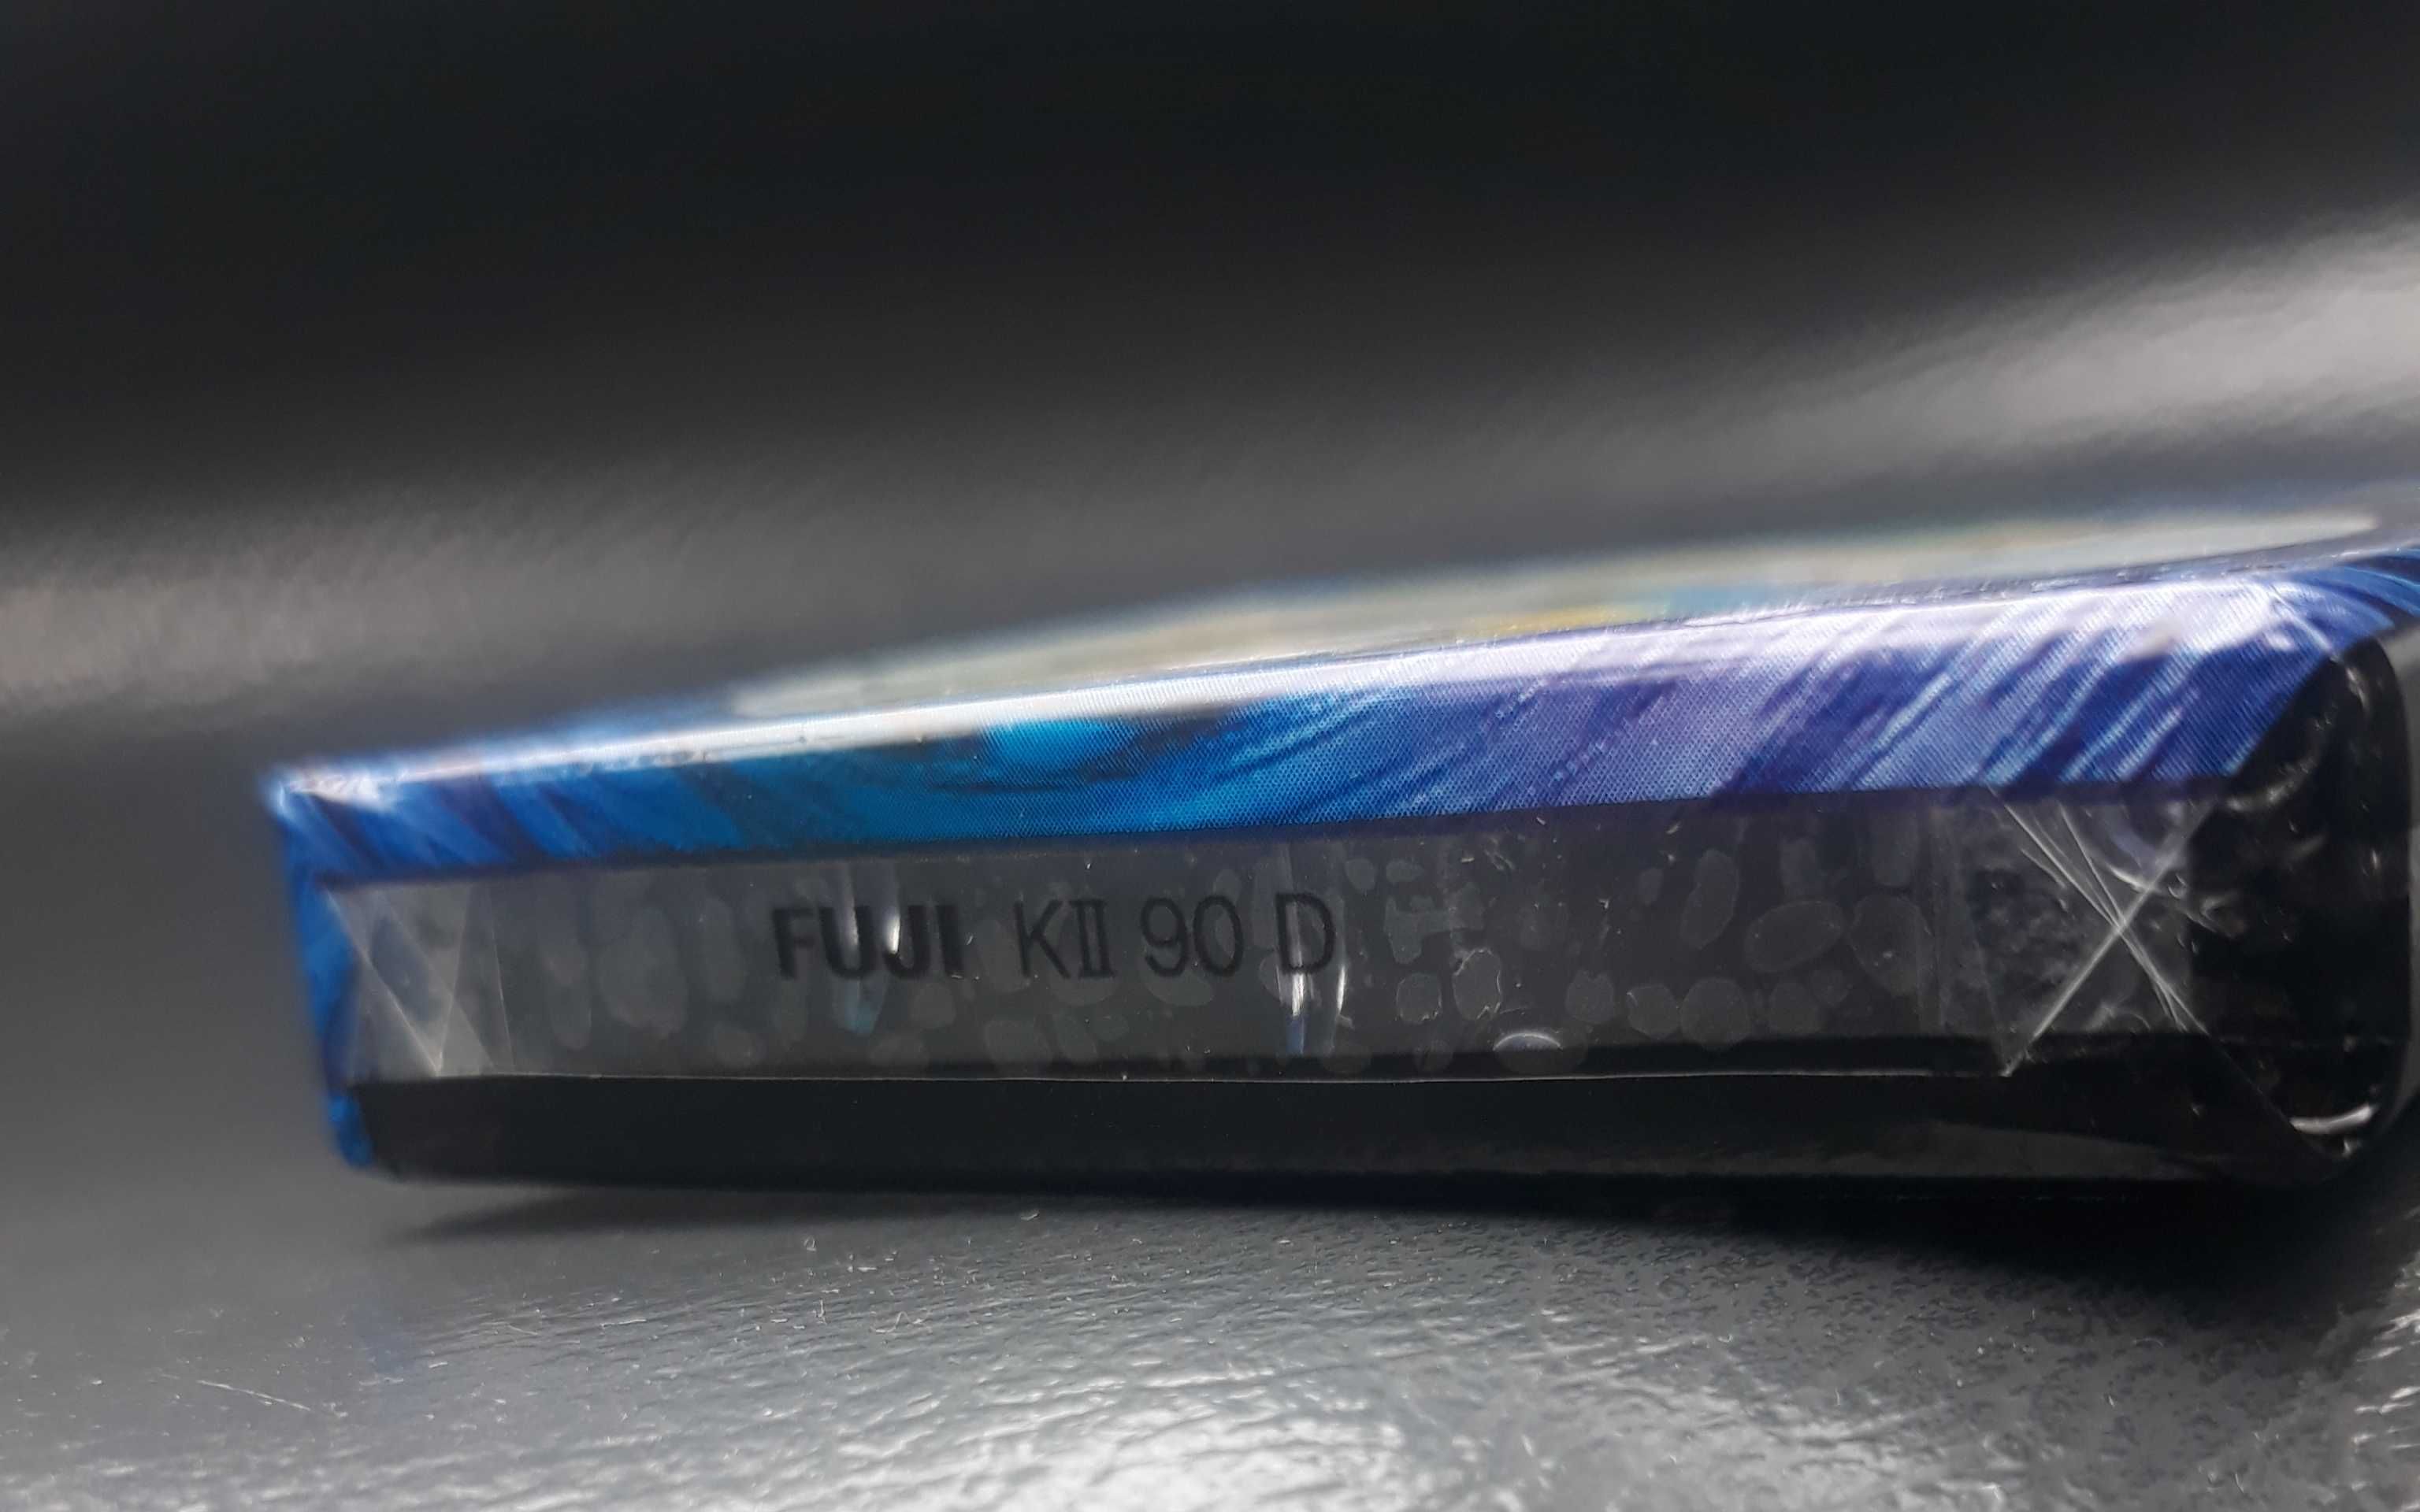 FUJI KII 90D / CrO2 Type II / новая запечатанная кассета